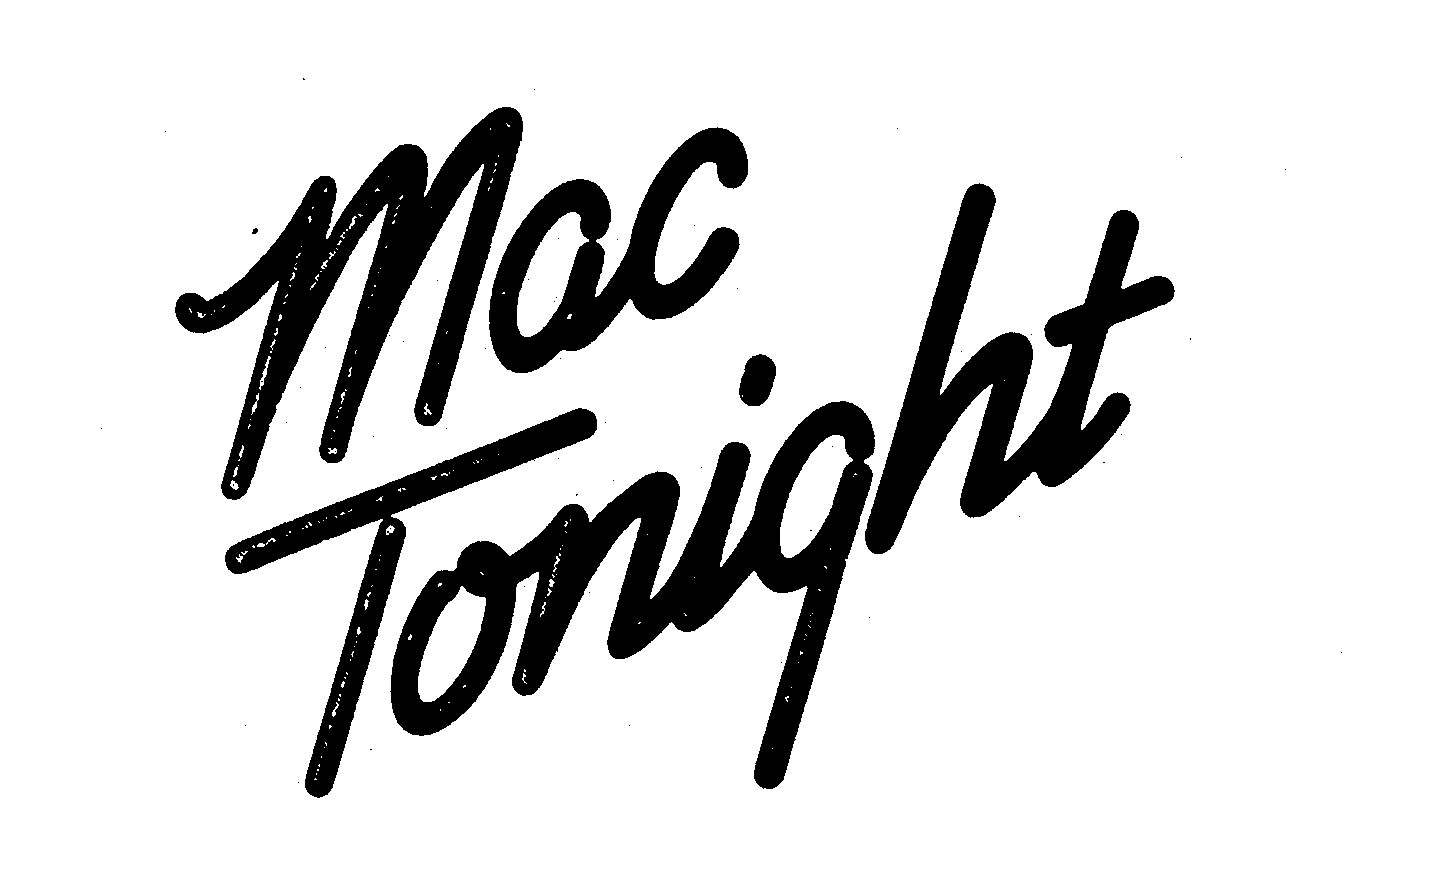  MAC TONIGHT